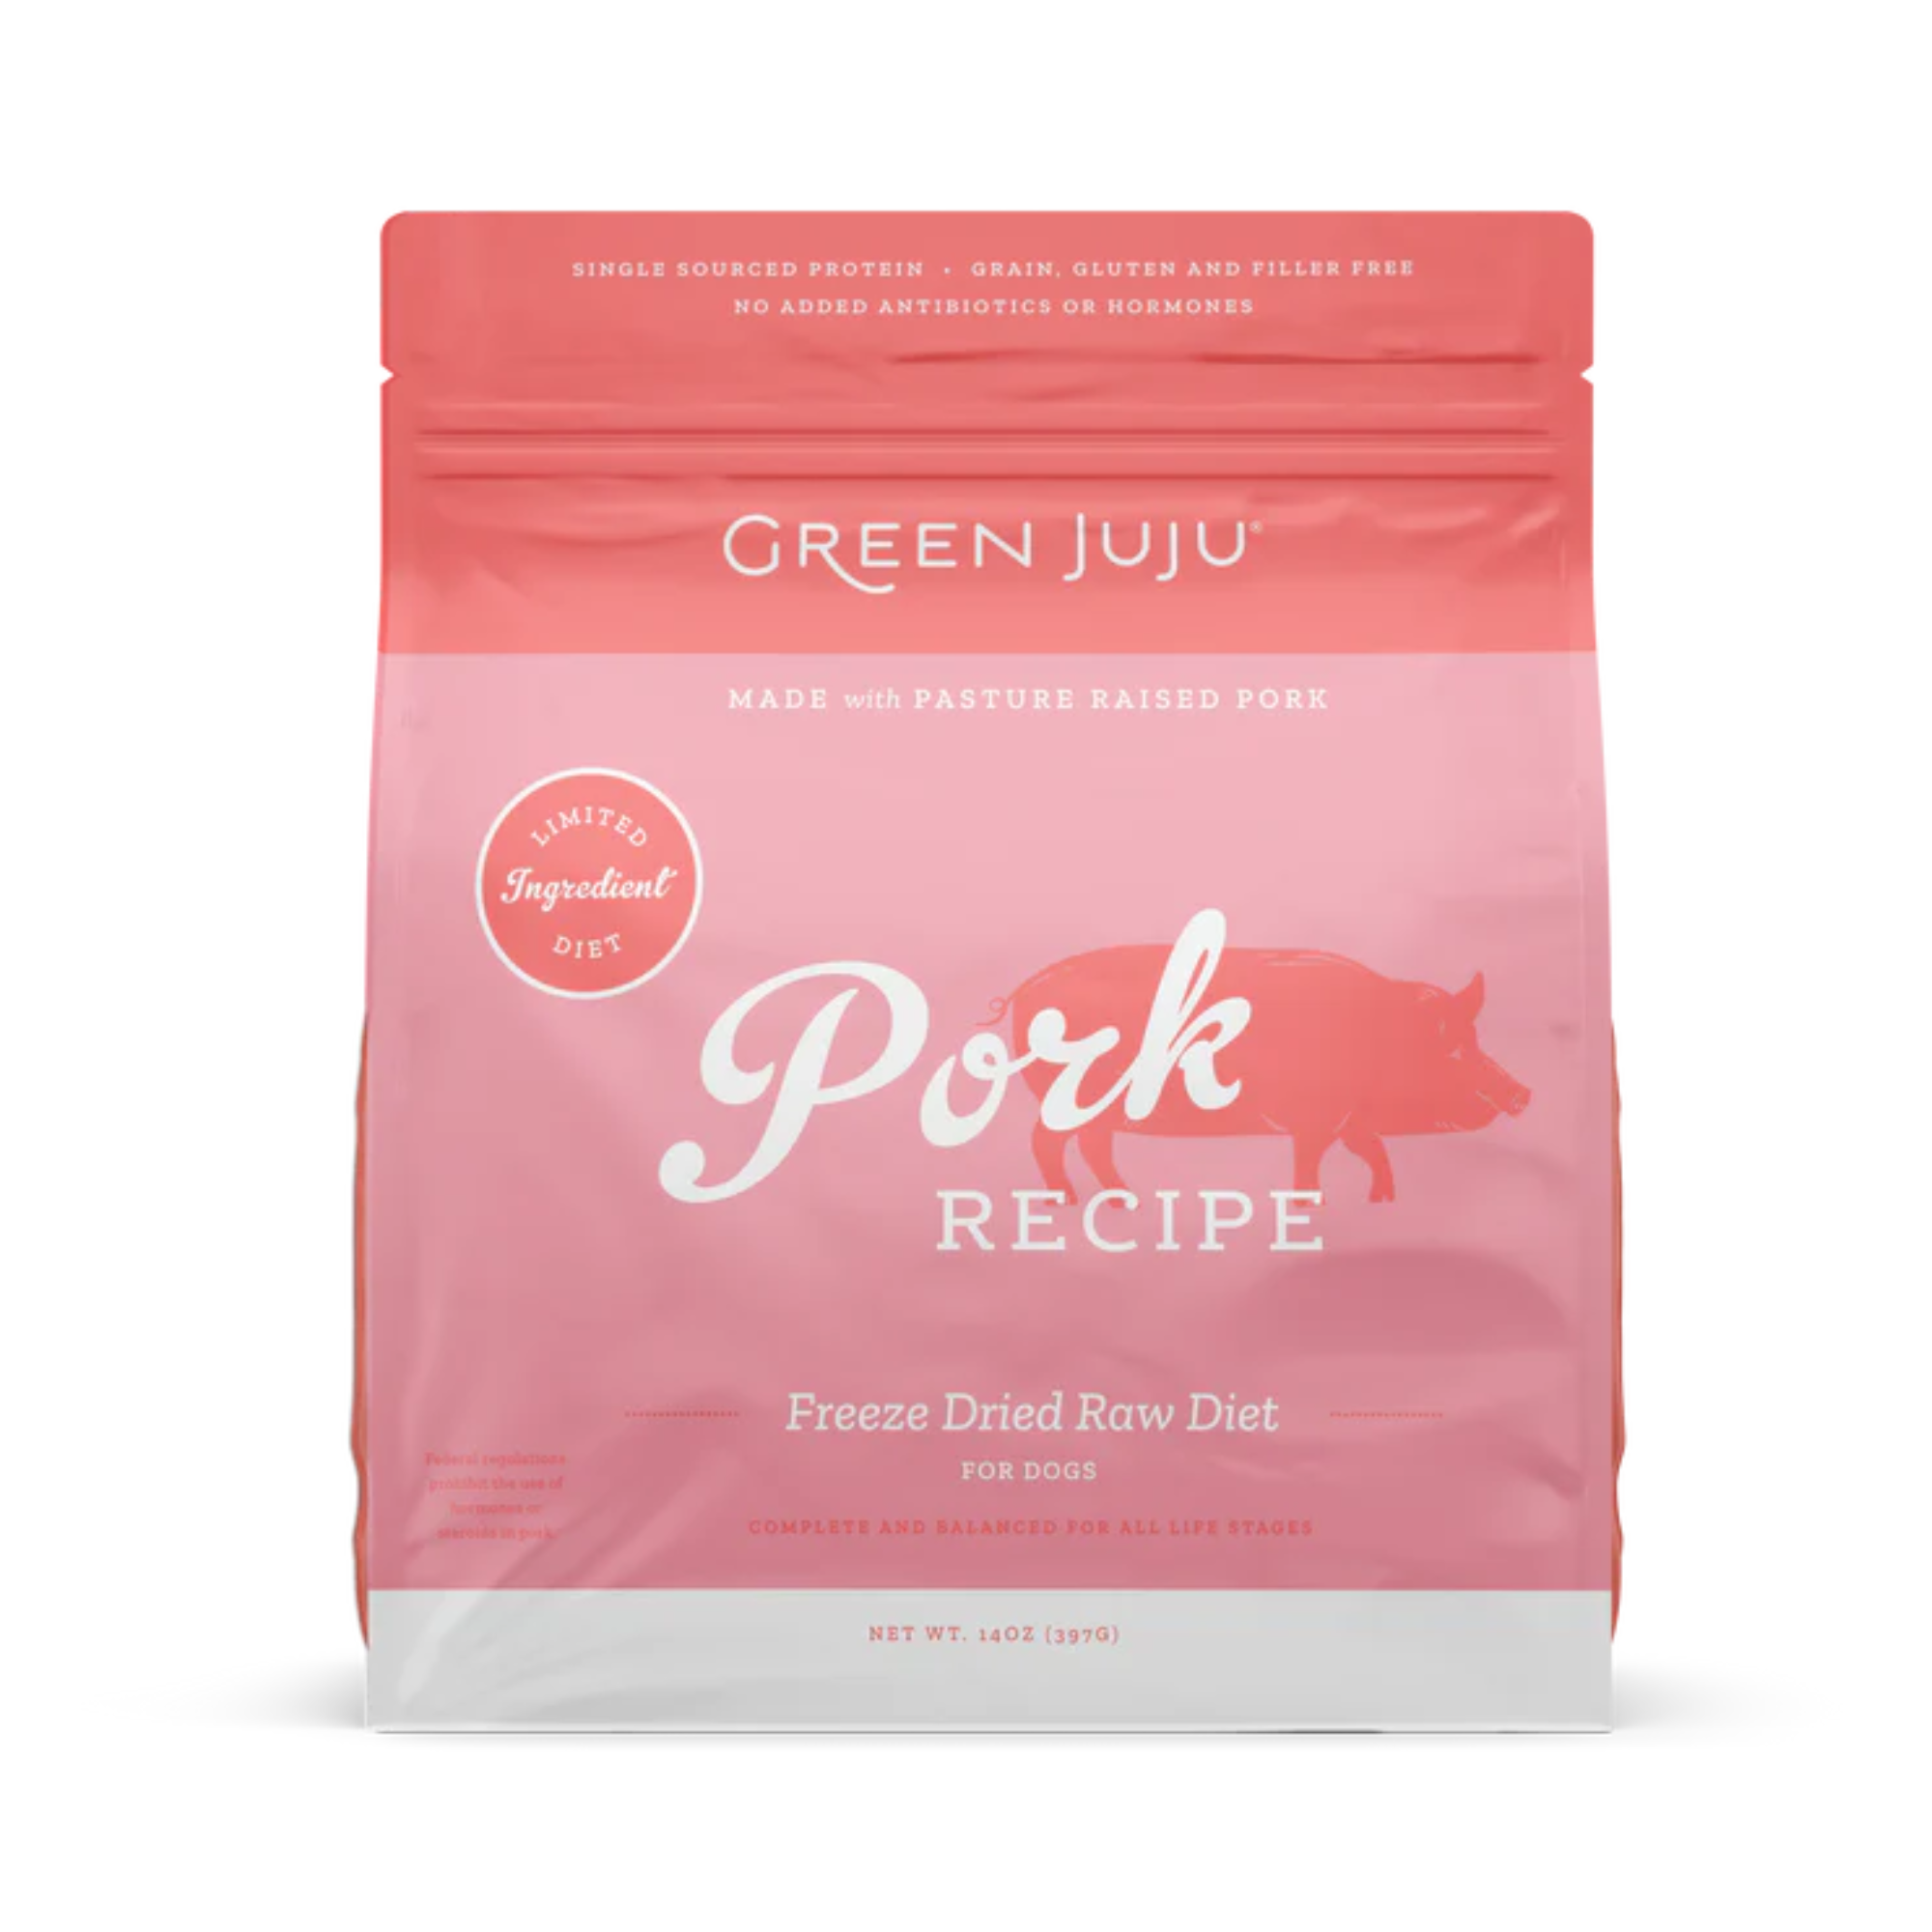 Green Juju Green Juju Freeze-Dried Pork Recipe